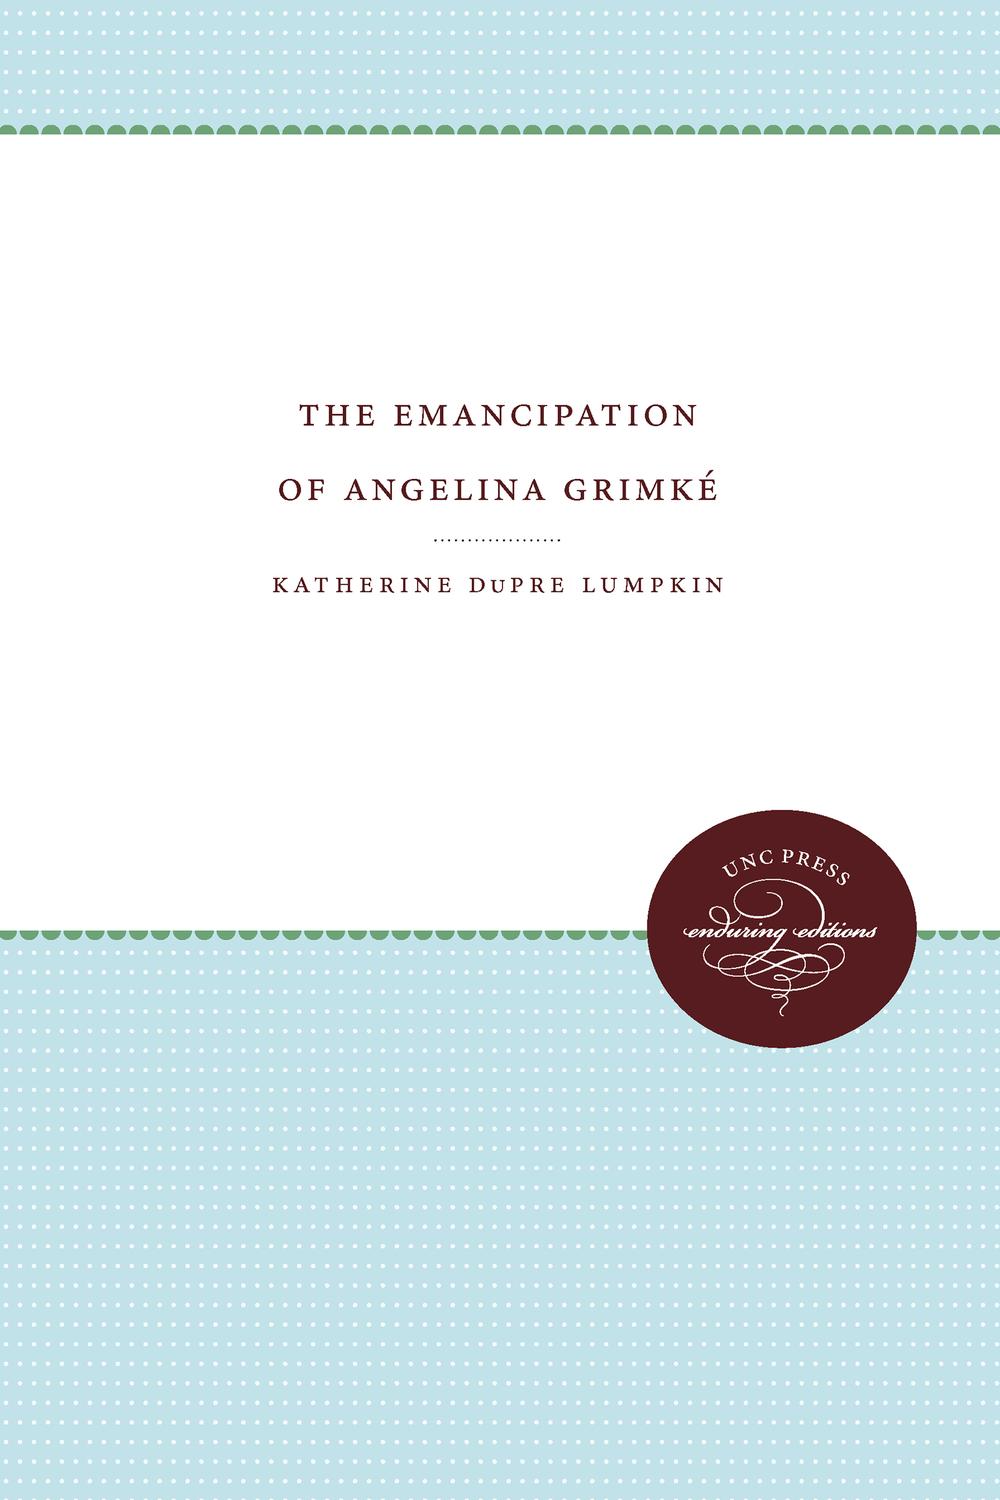 The Emancipation of Angelina Grimke - Katherine DuPre Lumpkin